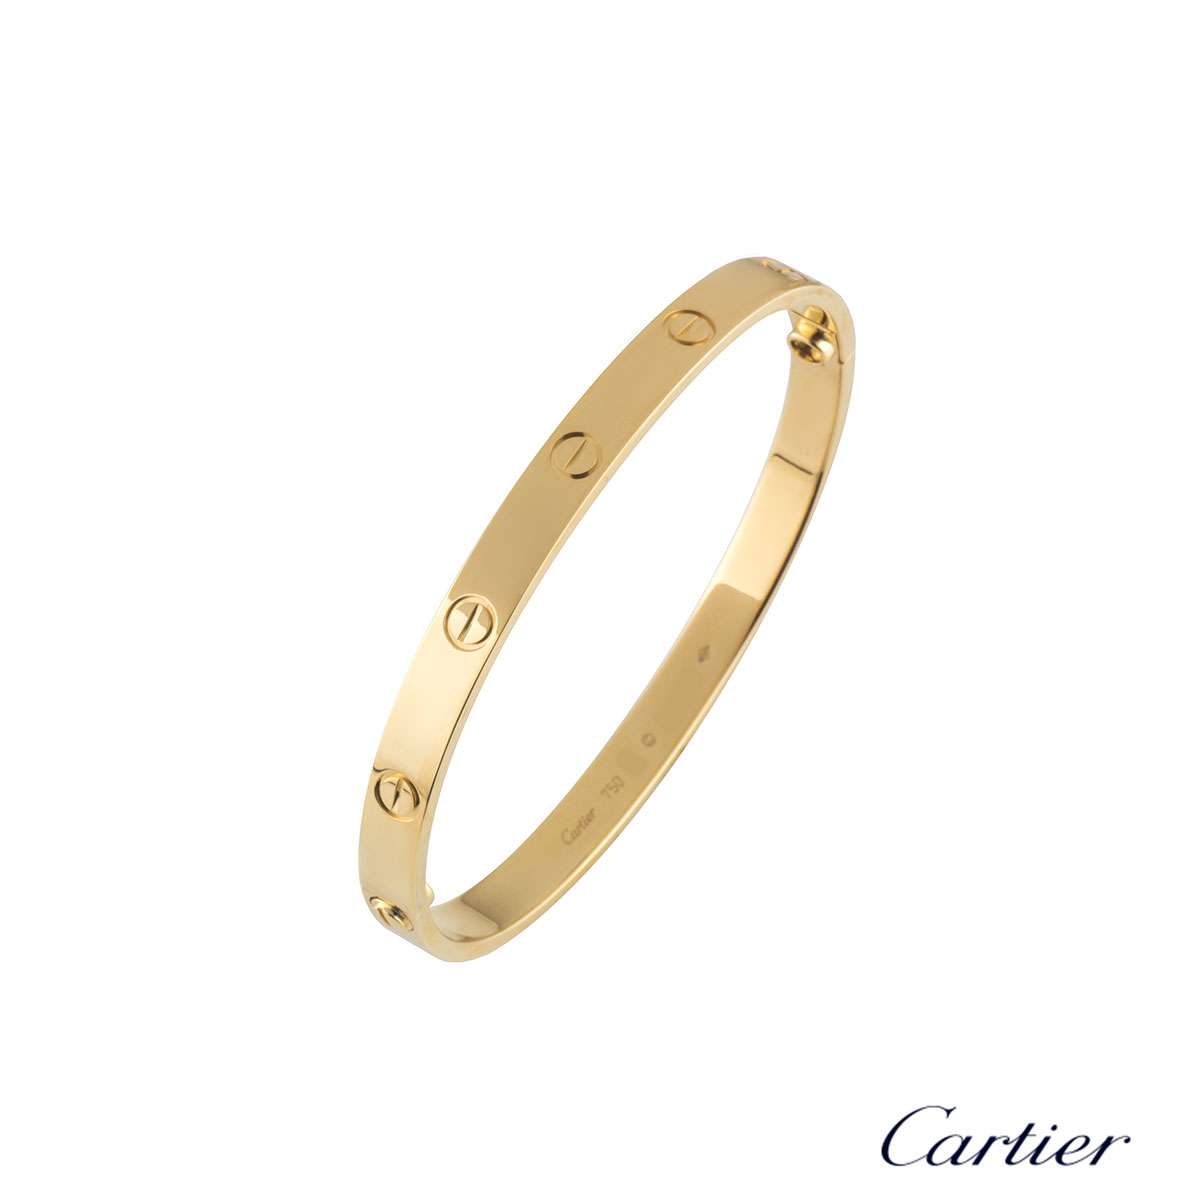 size 21 cartier love bracelet